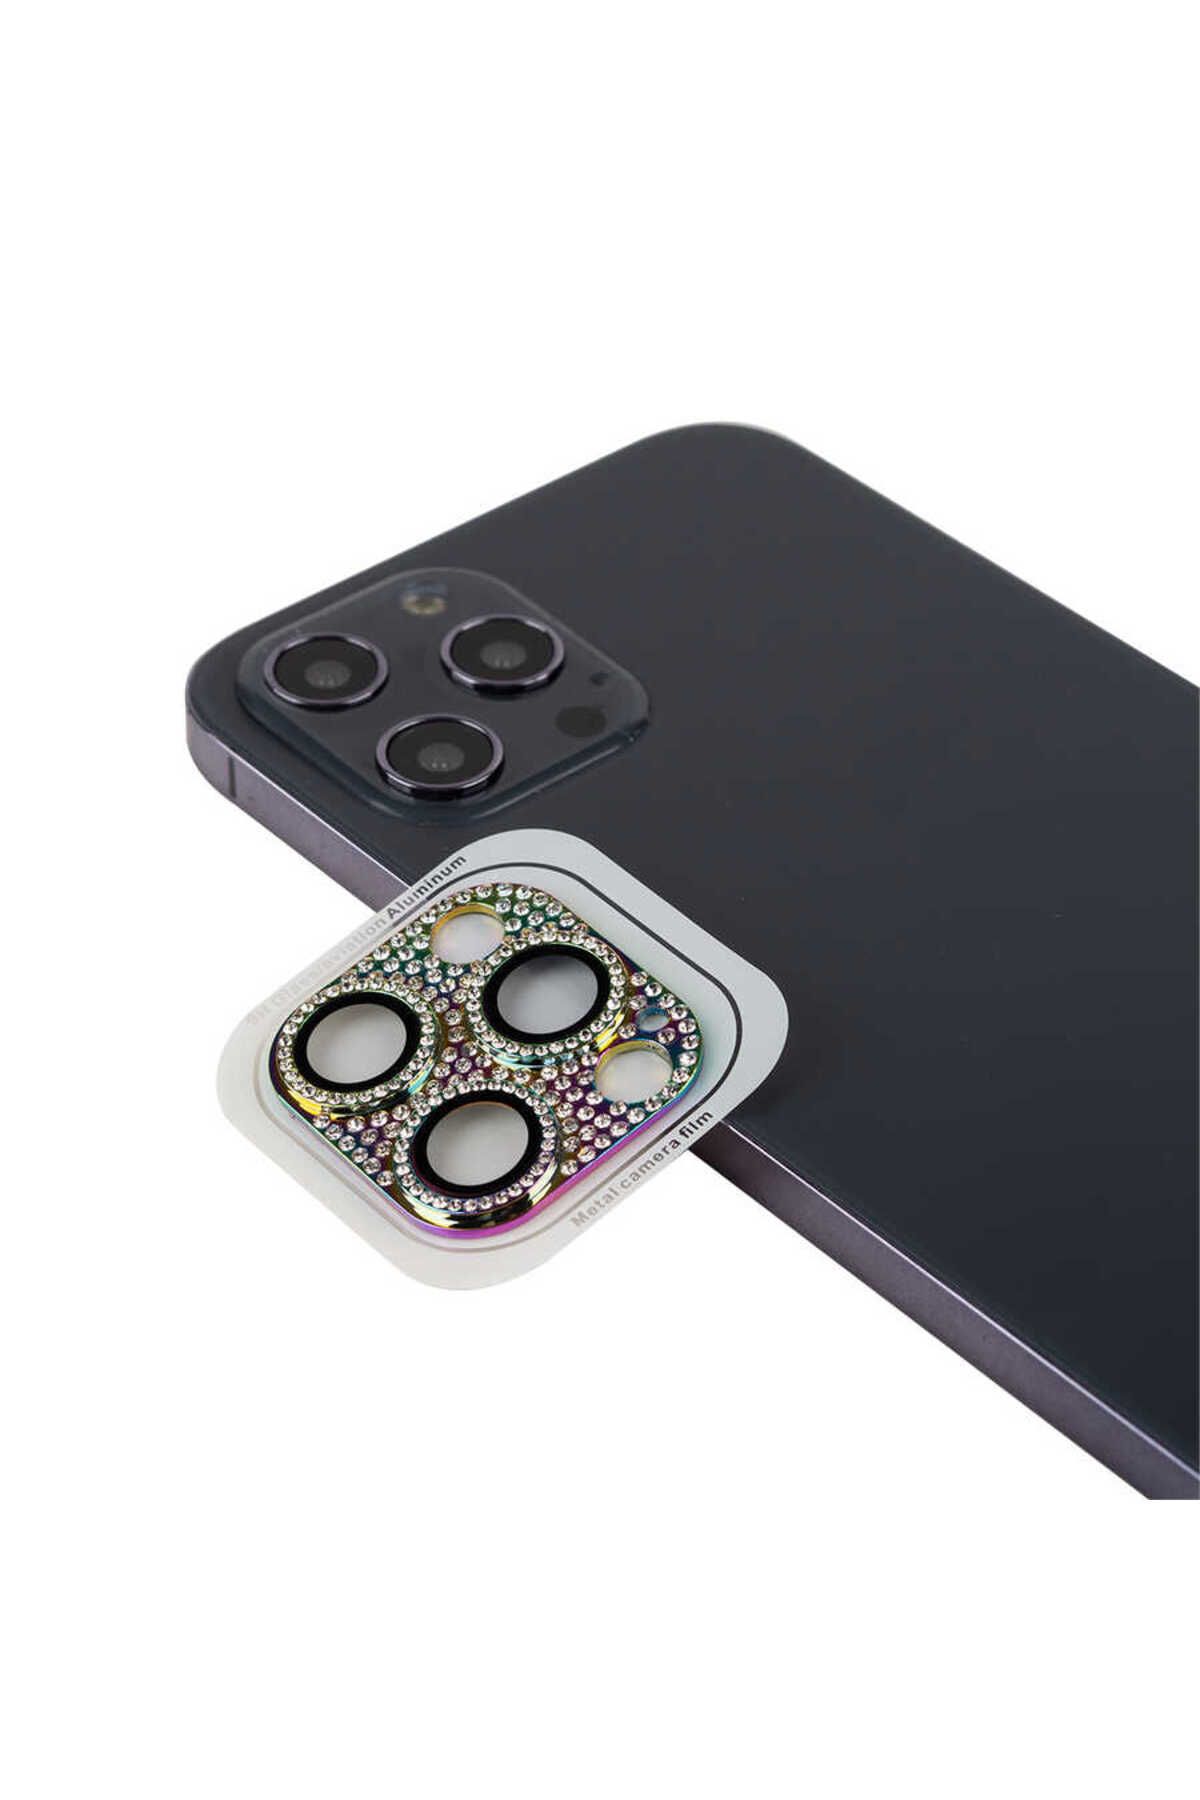 Zore iPhone 12 Pro Max Uyumlu YSF CL-08 Kamera Lens Koruyucu-Colorful